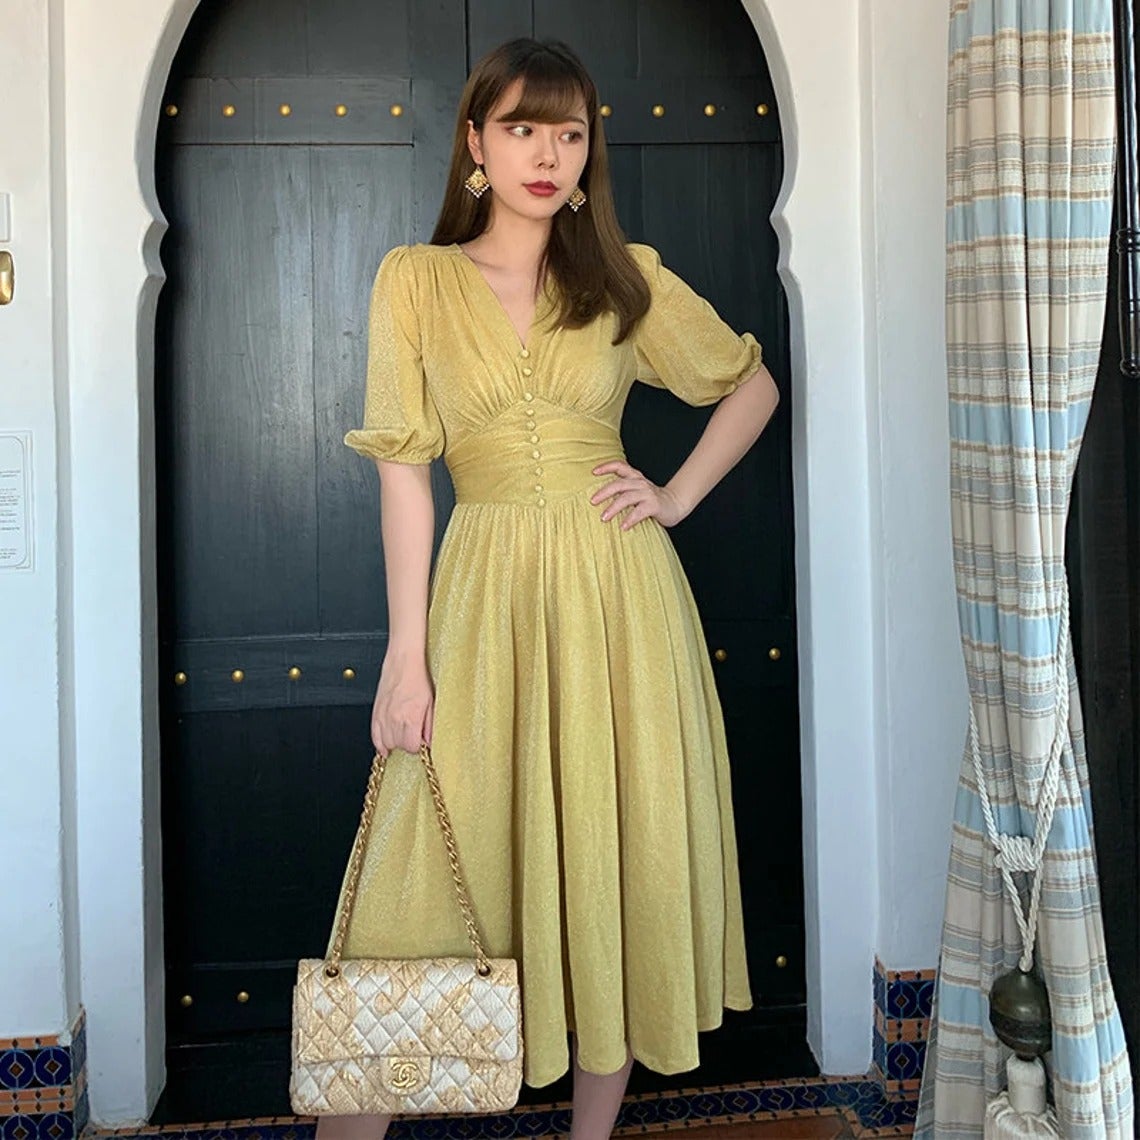 model wearing the dress in yellow